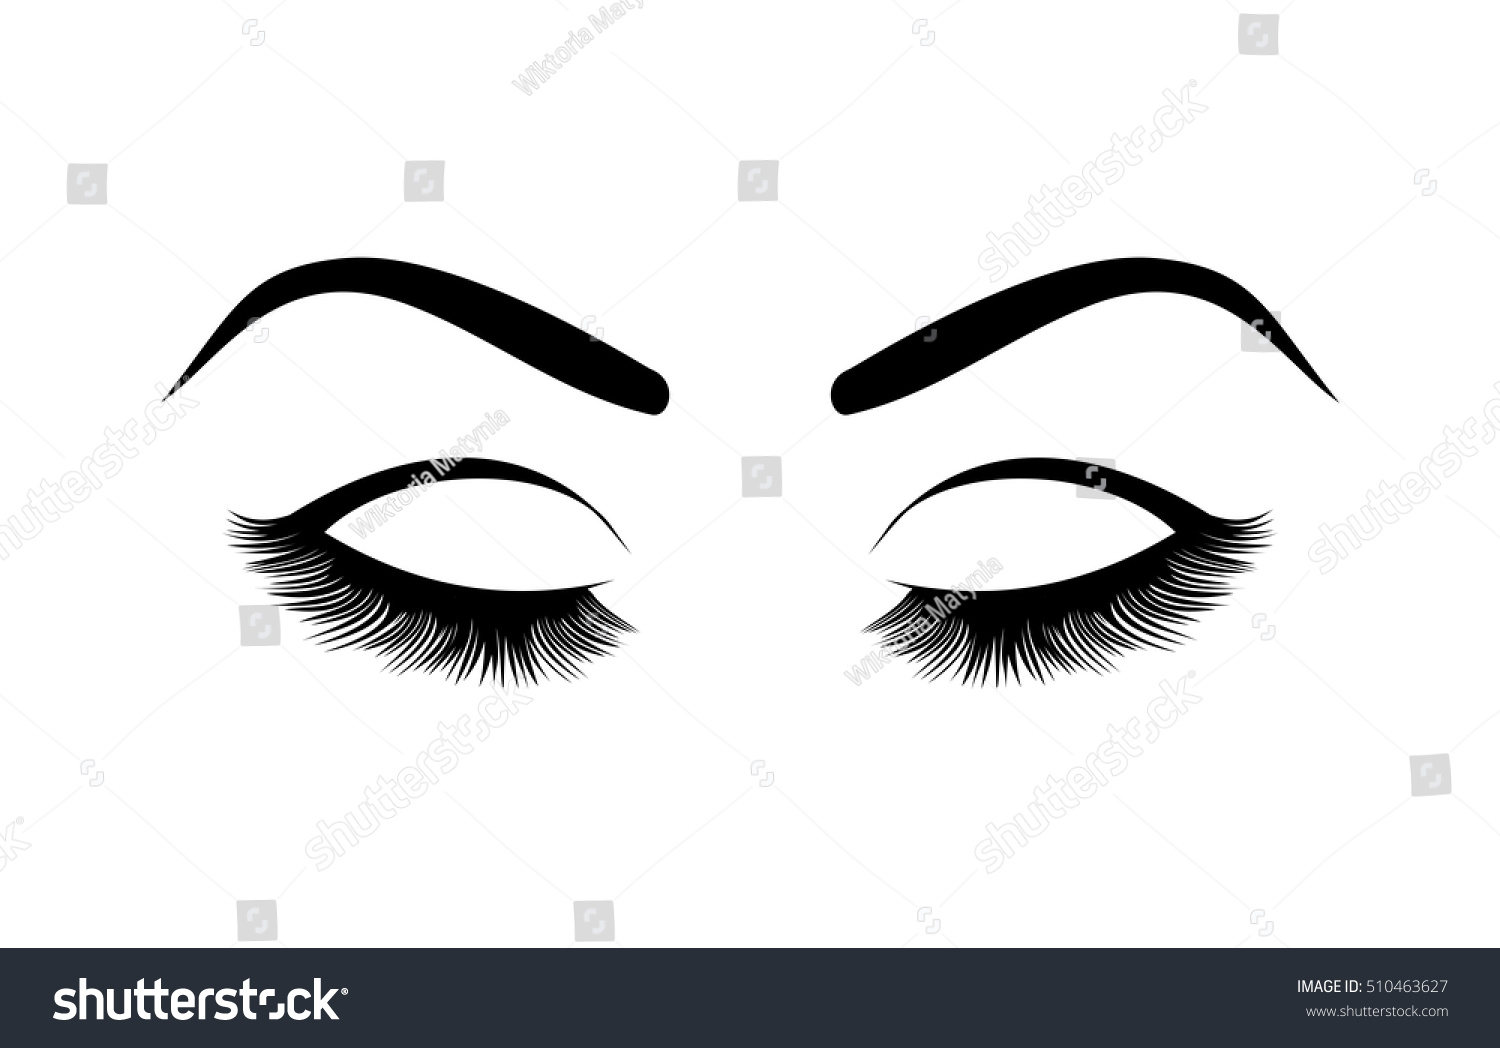 Eyelashes Vector Illustration Stock Vector 510463627 - Shutterstock